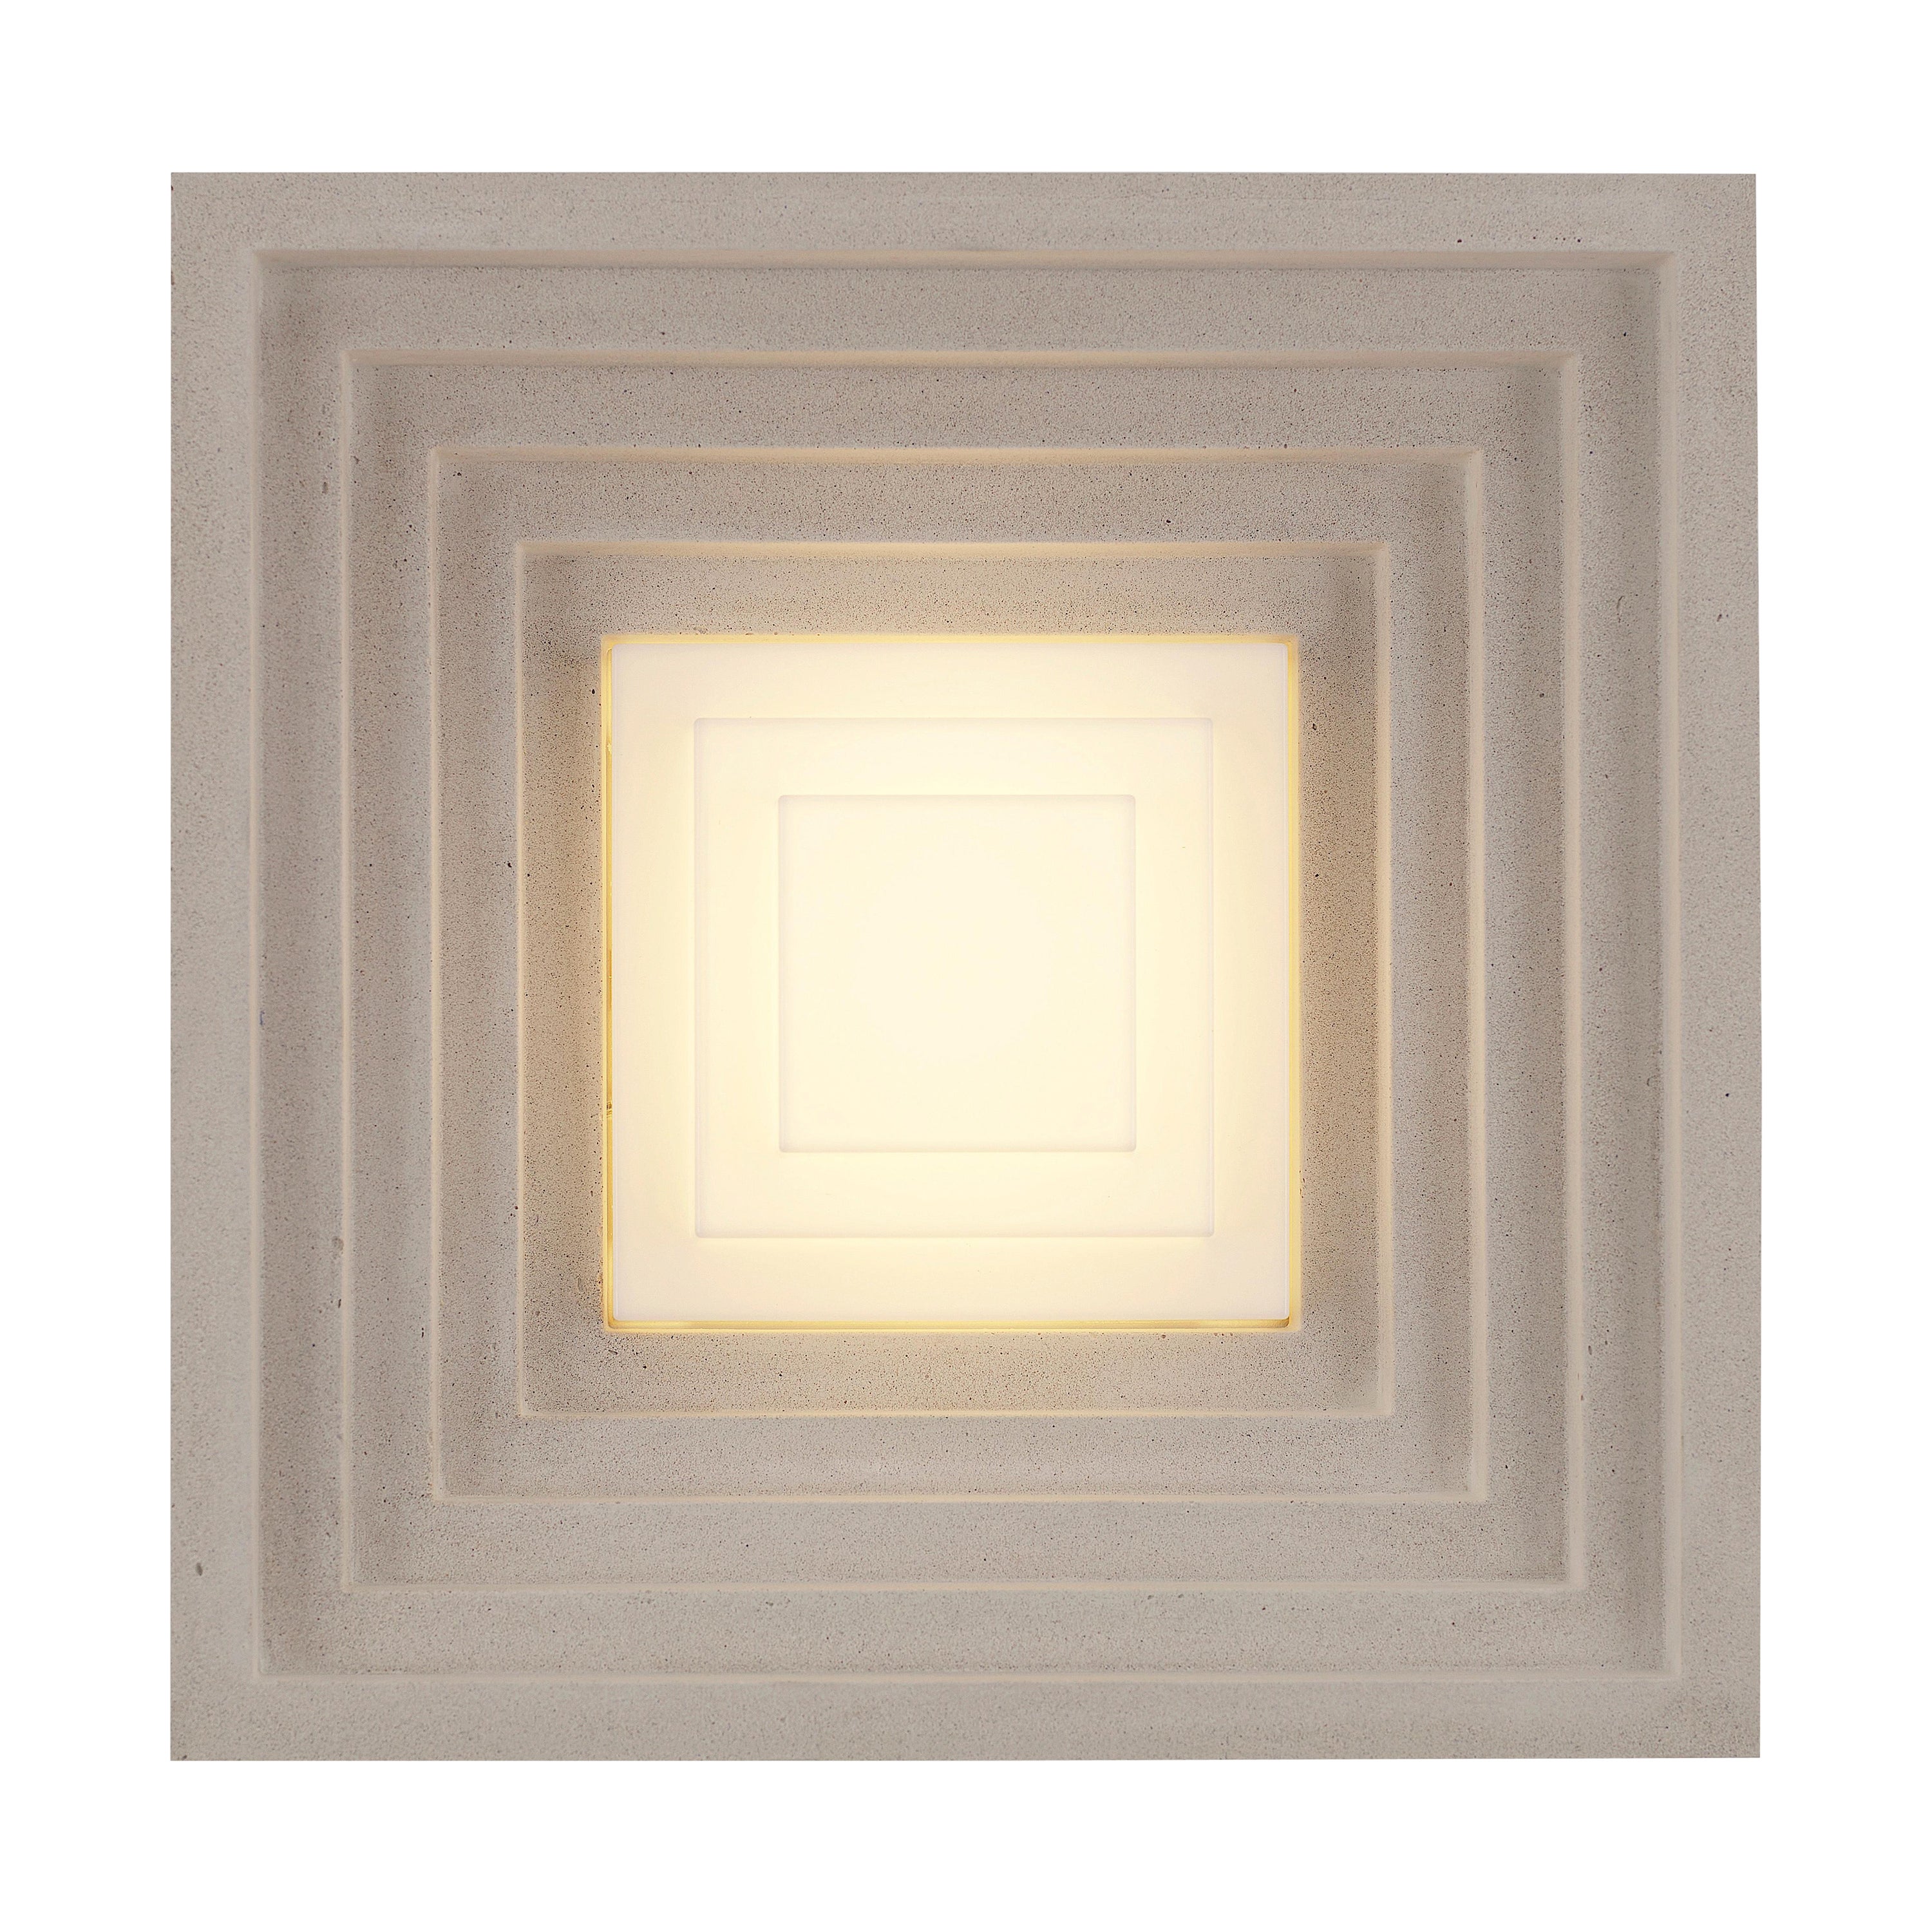 Lee Broom - Pantheum Surface Light For Sale